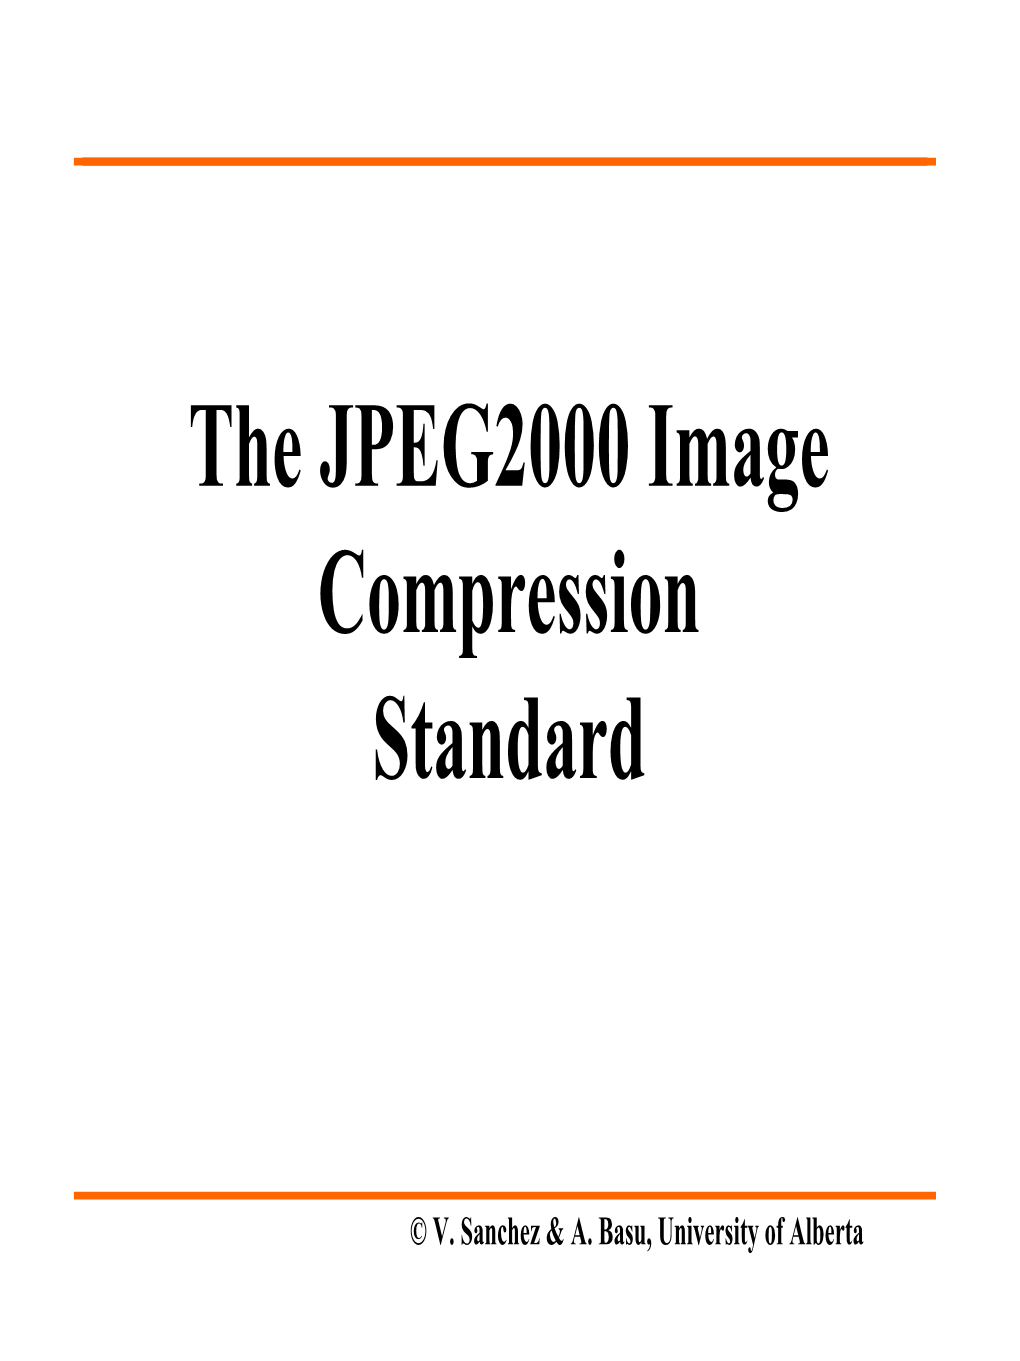 The JPEG2000 Image Compression Standard